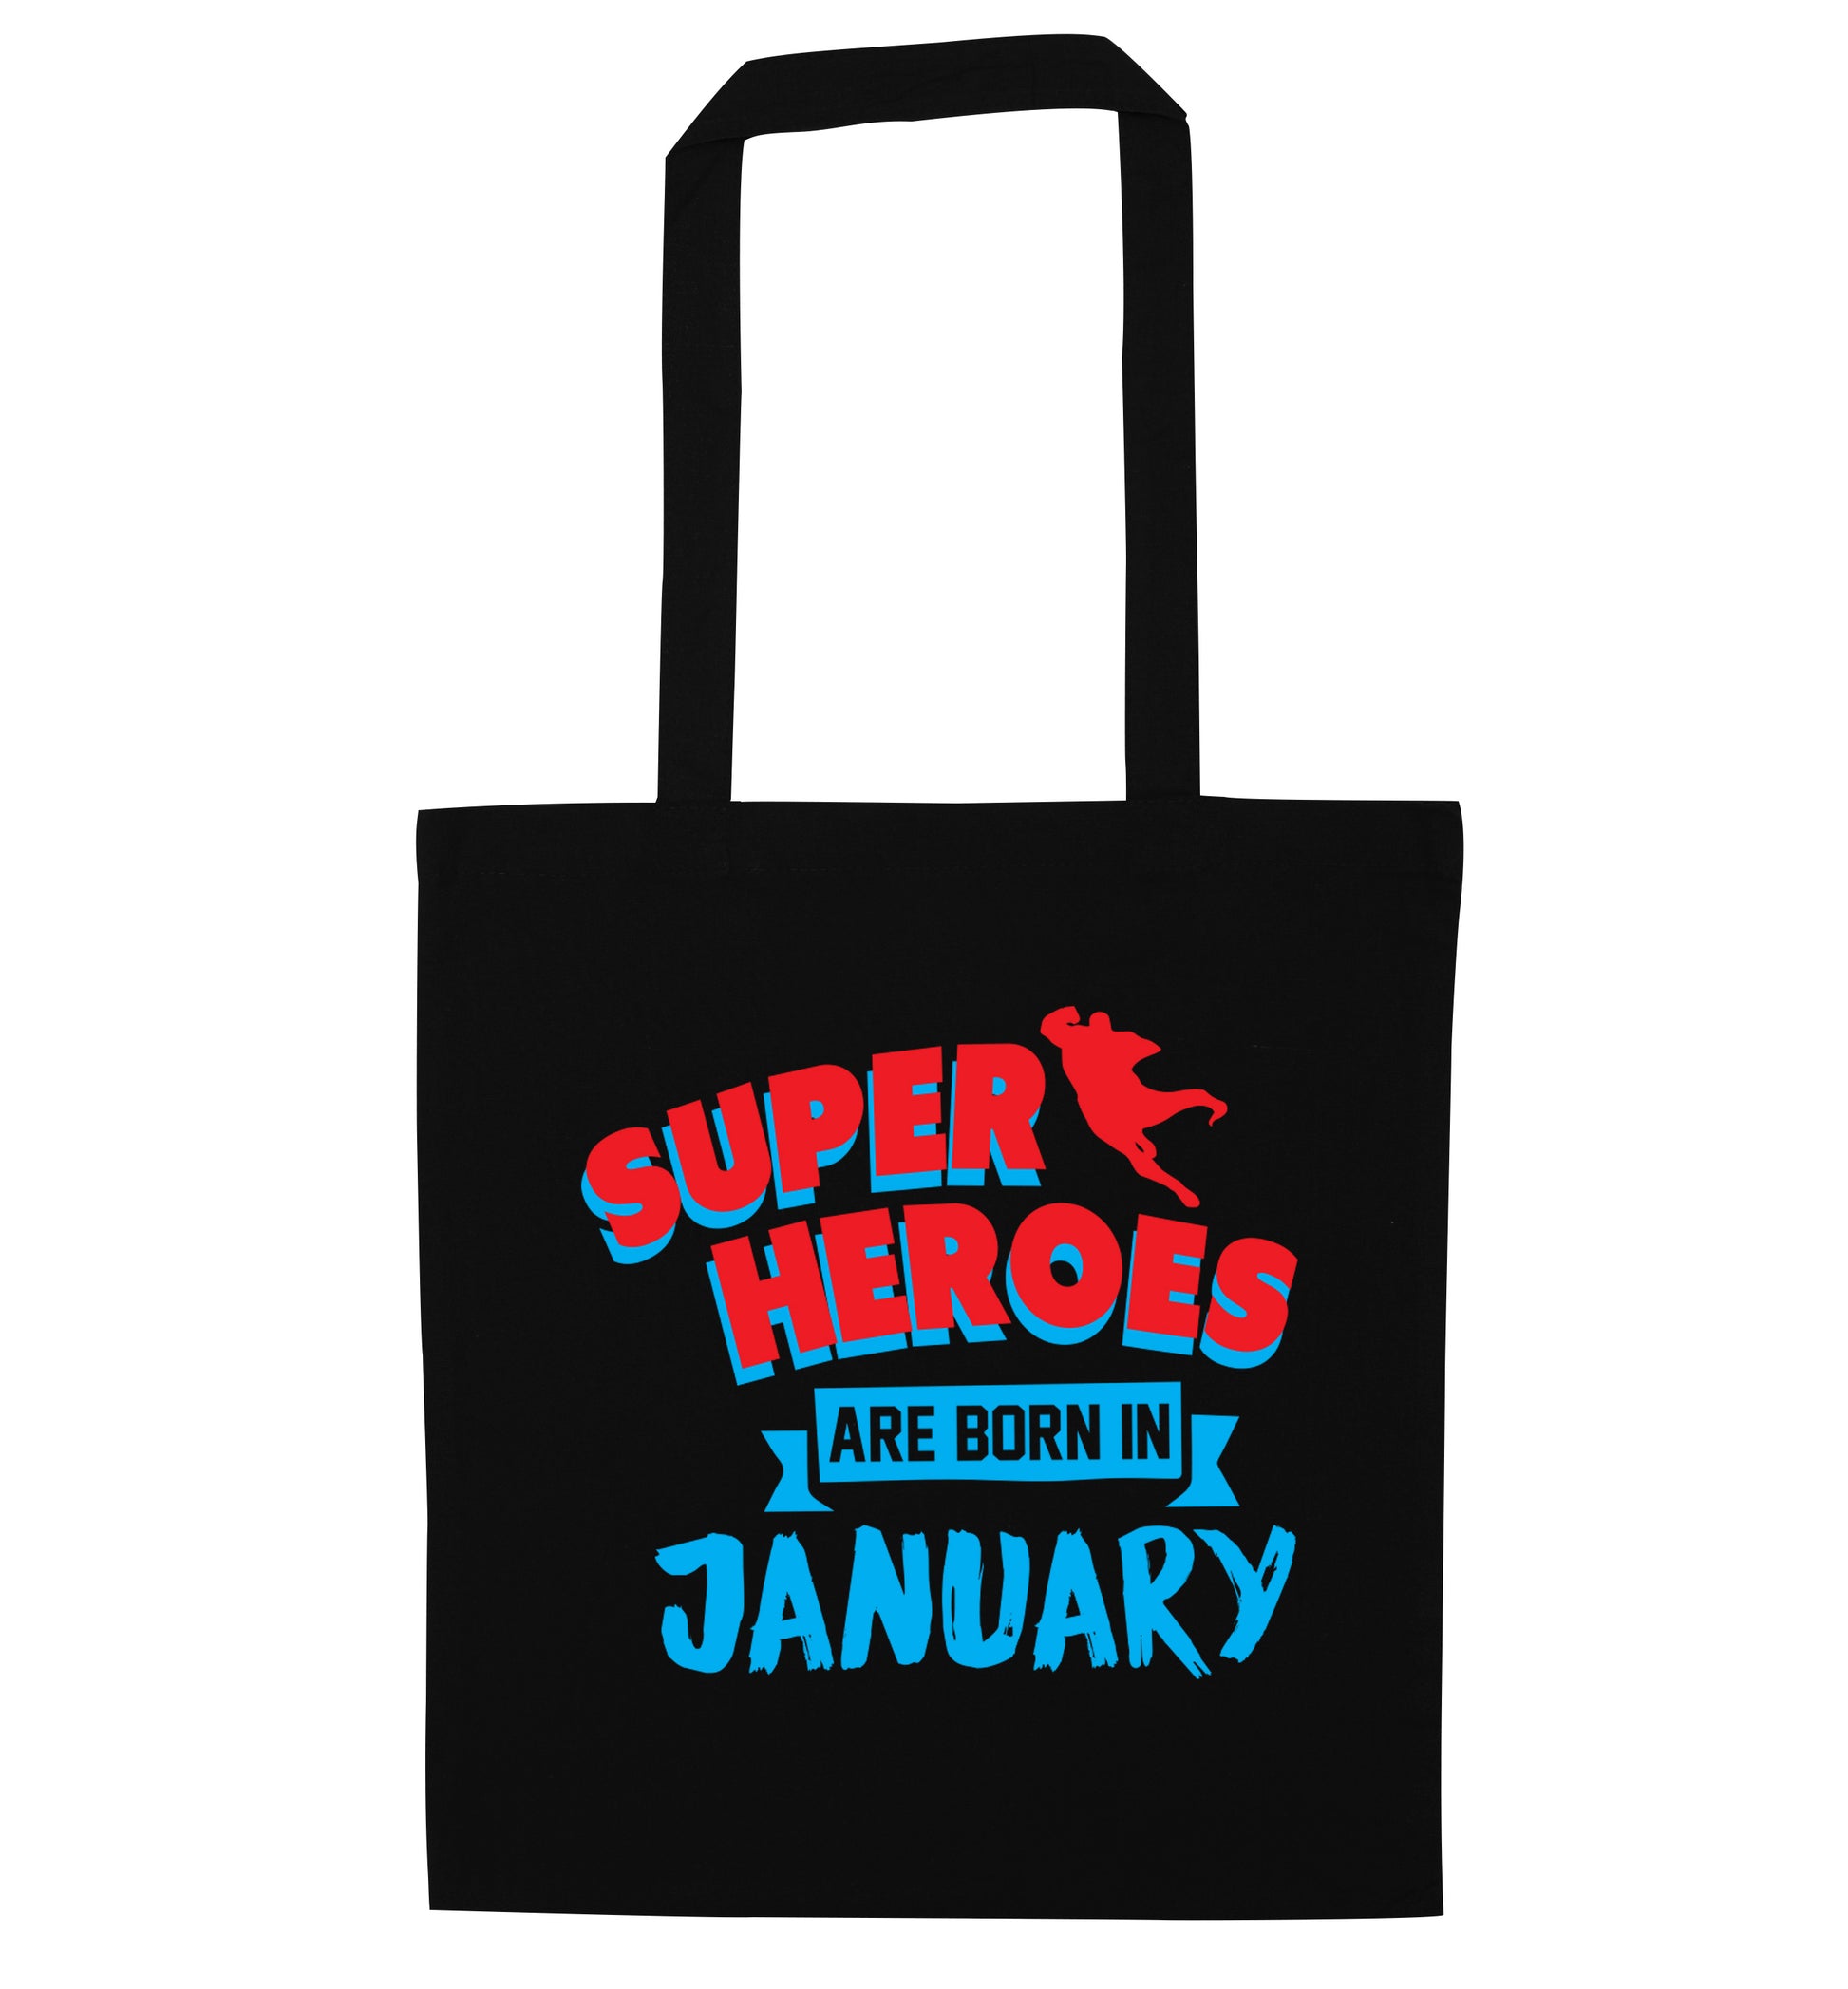 Superheros are born in January black tote bag